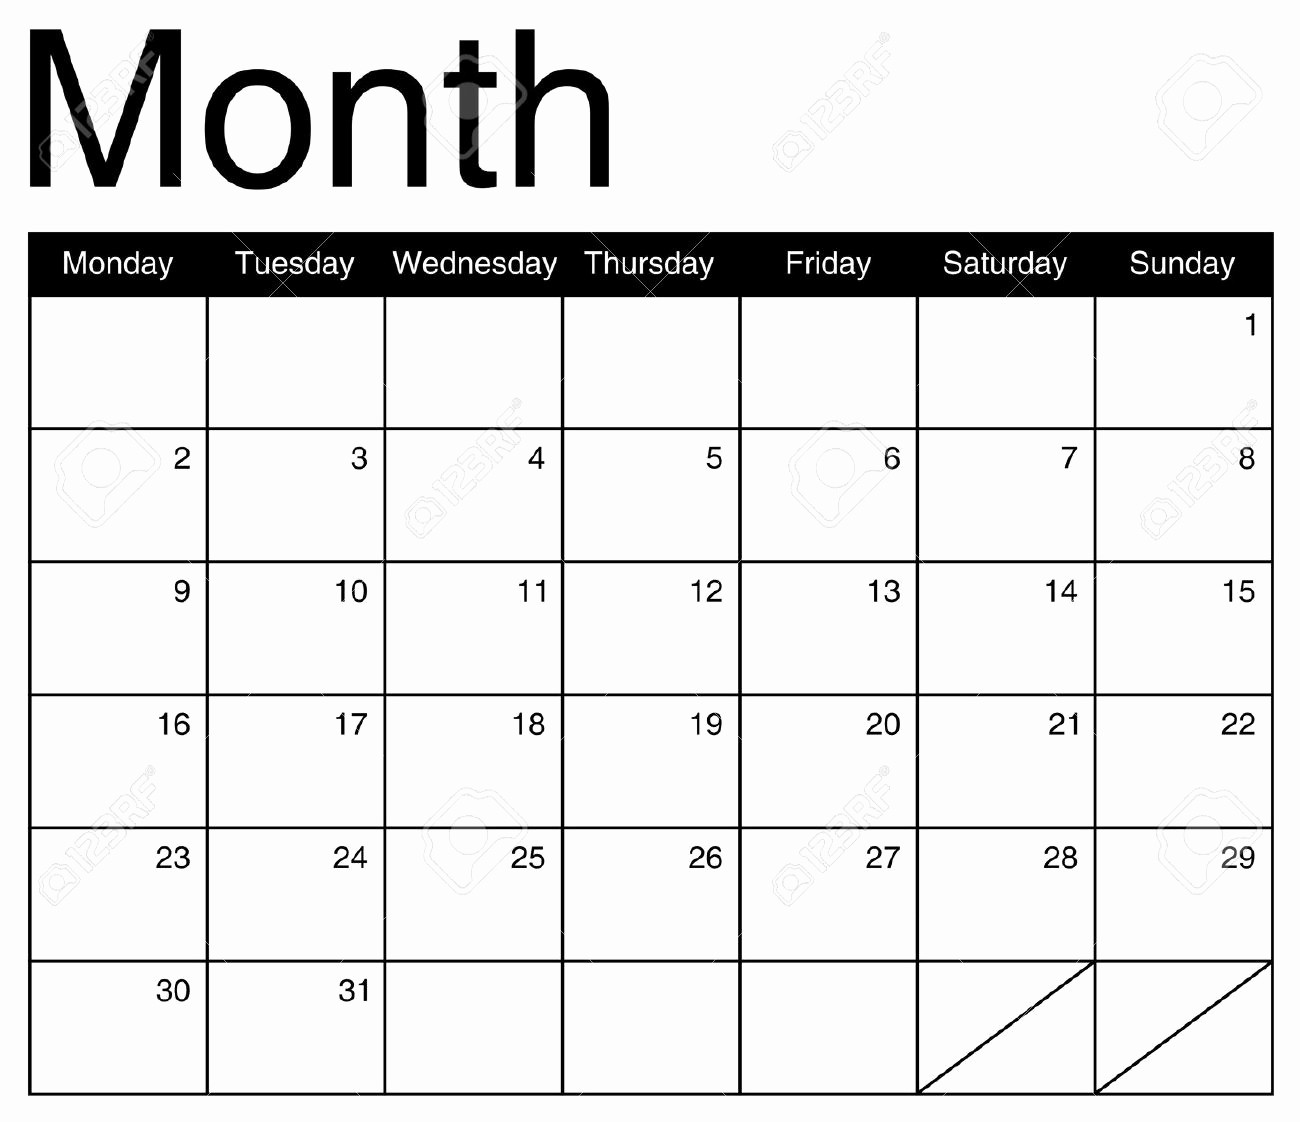 Month by Month Calendar Template Lovely Monthly Calendar – 2017 Printable Calendar